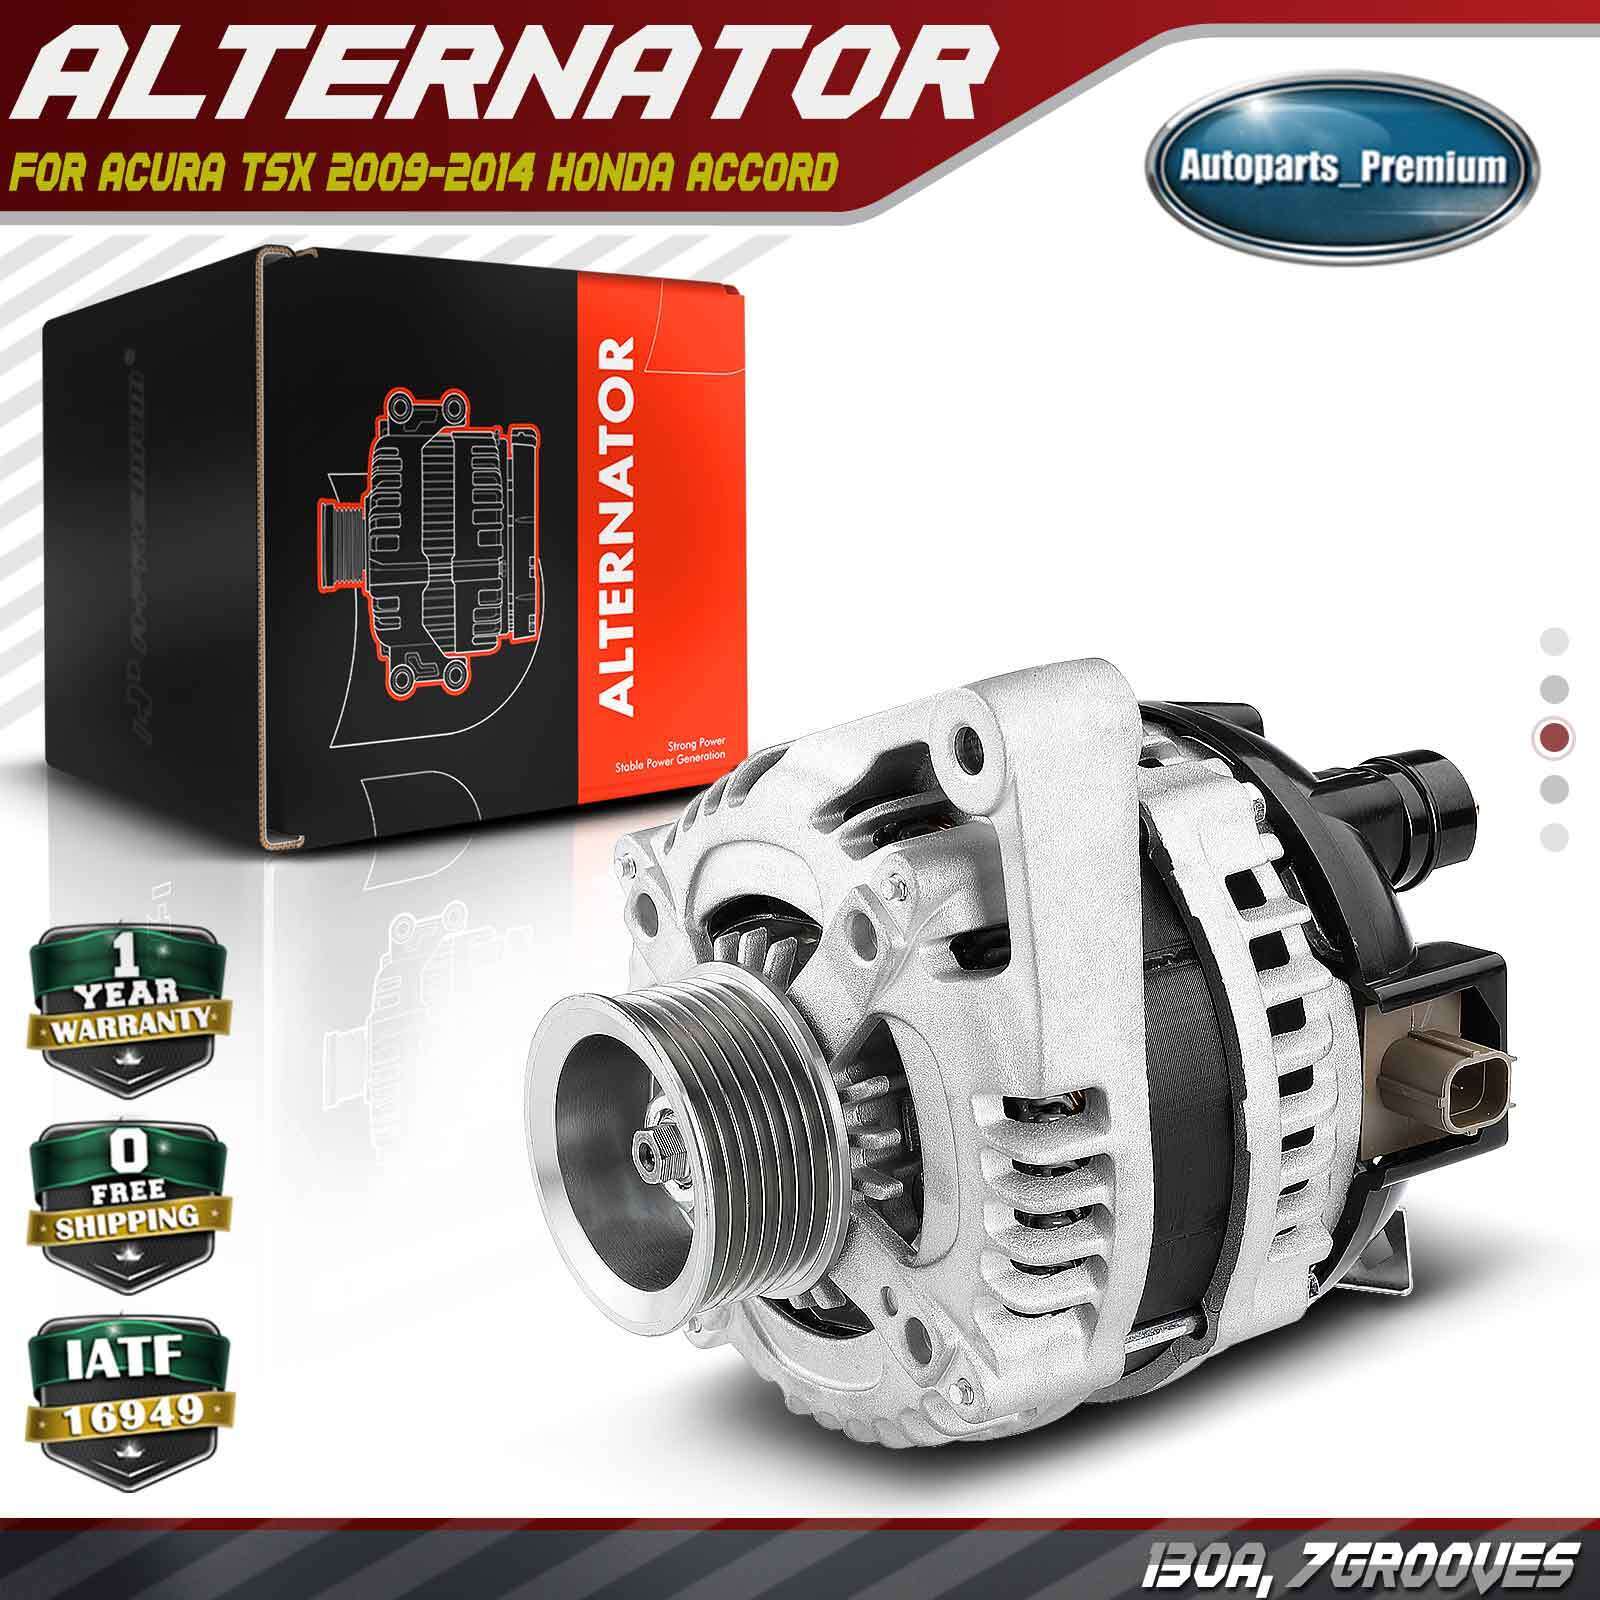 Alternator for Acura	TSX 2009-2014 Honda Accord 2008-2012 2.4L130A CW 7-Groove